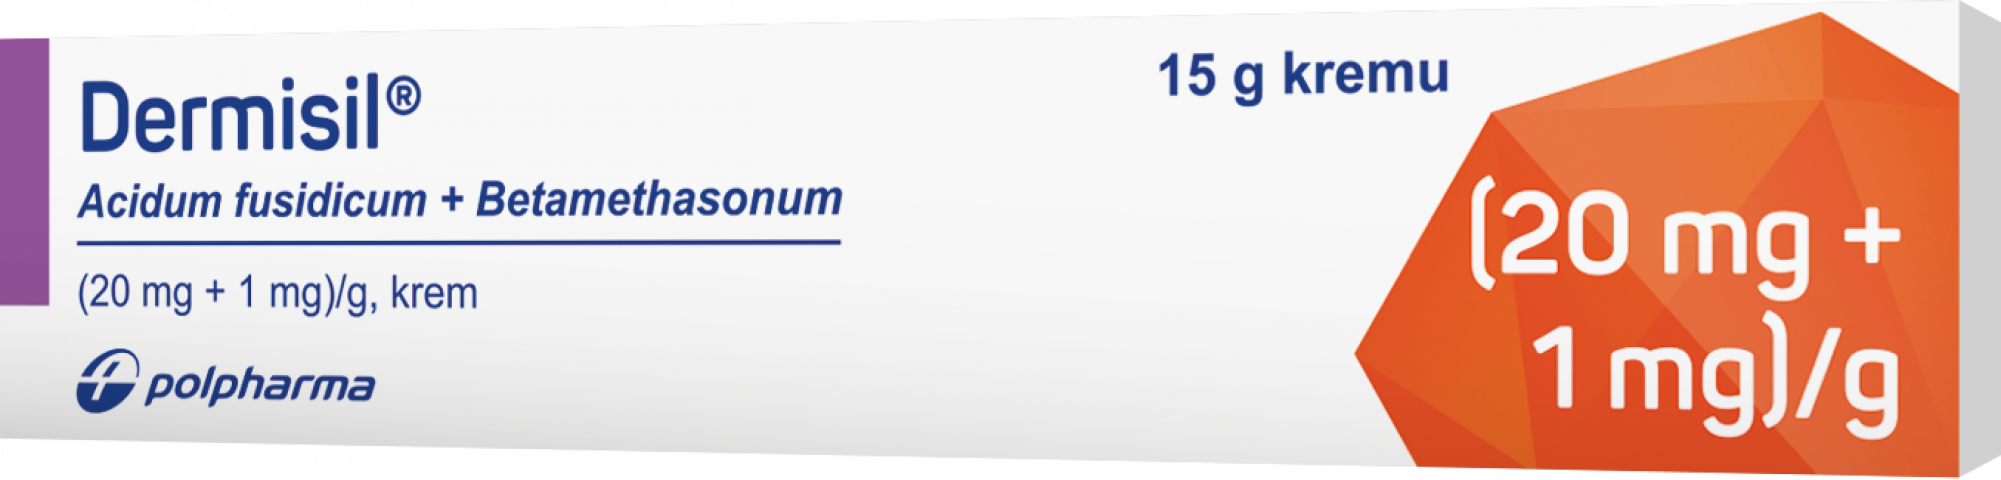 Dermisil krem (20 mg + 1 mg)/g x 15 g